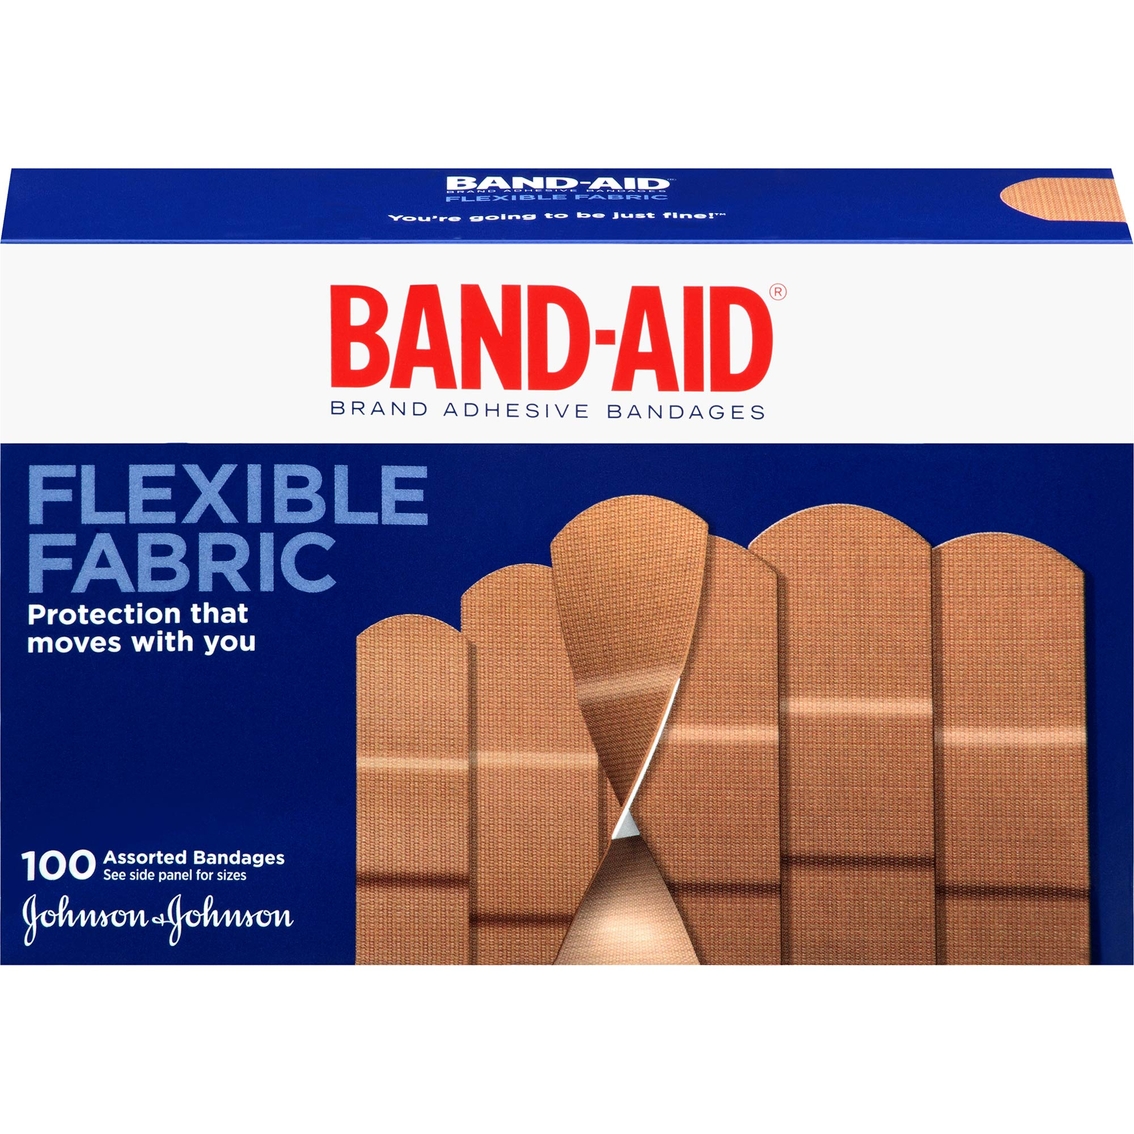 Band-aid Brand Adhesive Bandages Flexible Fabric 100 Pk.